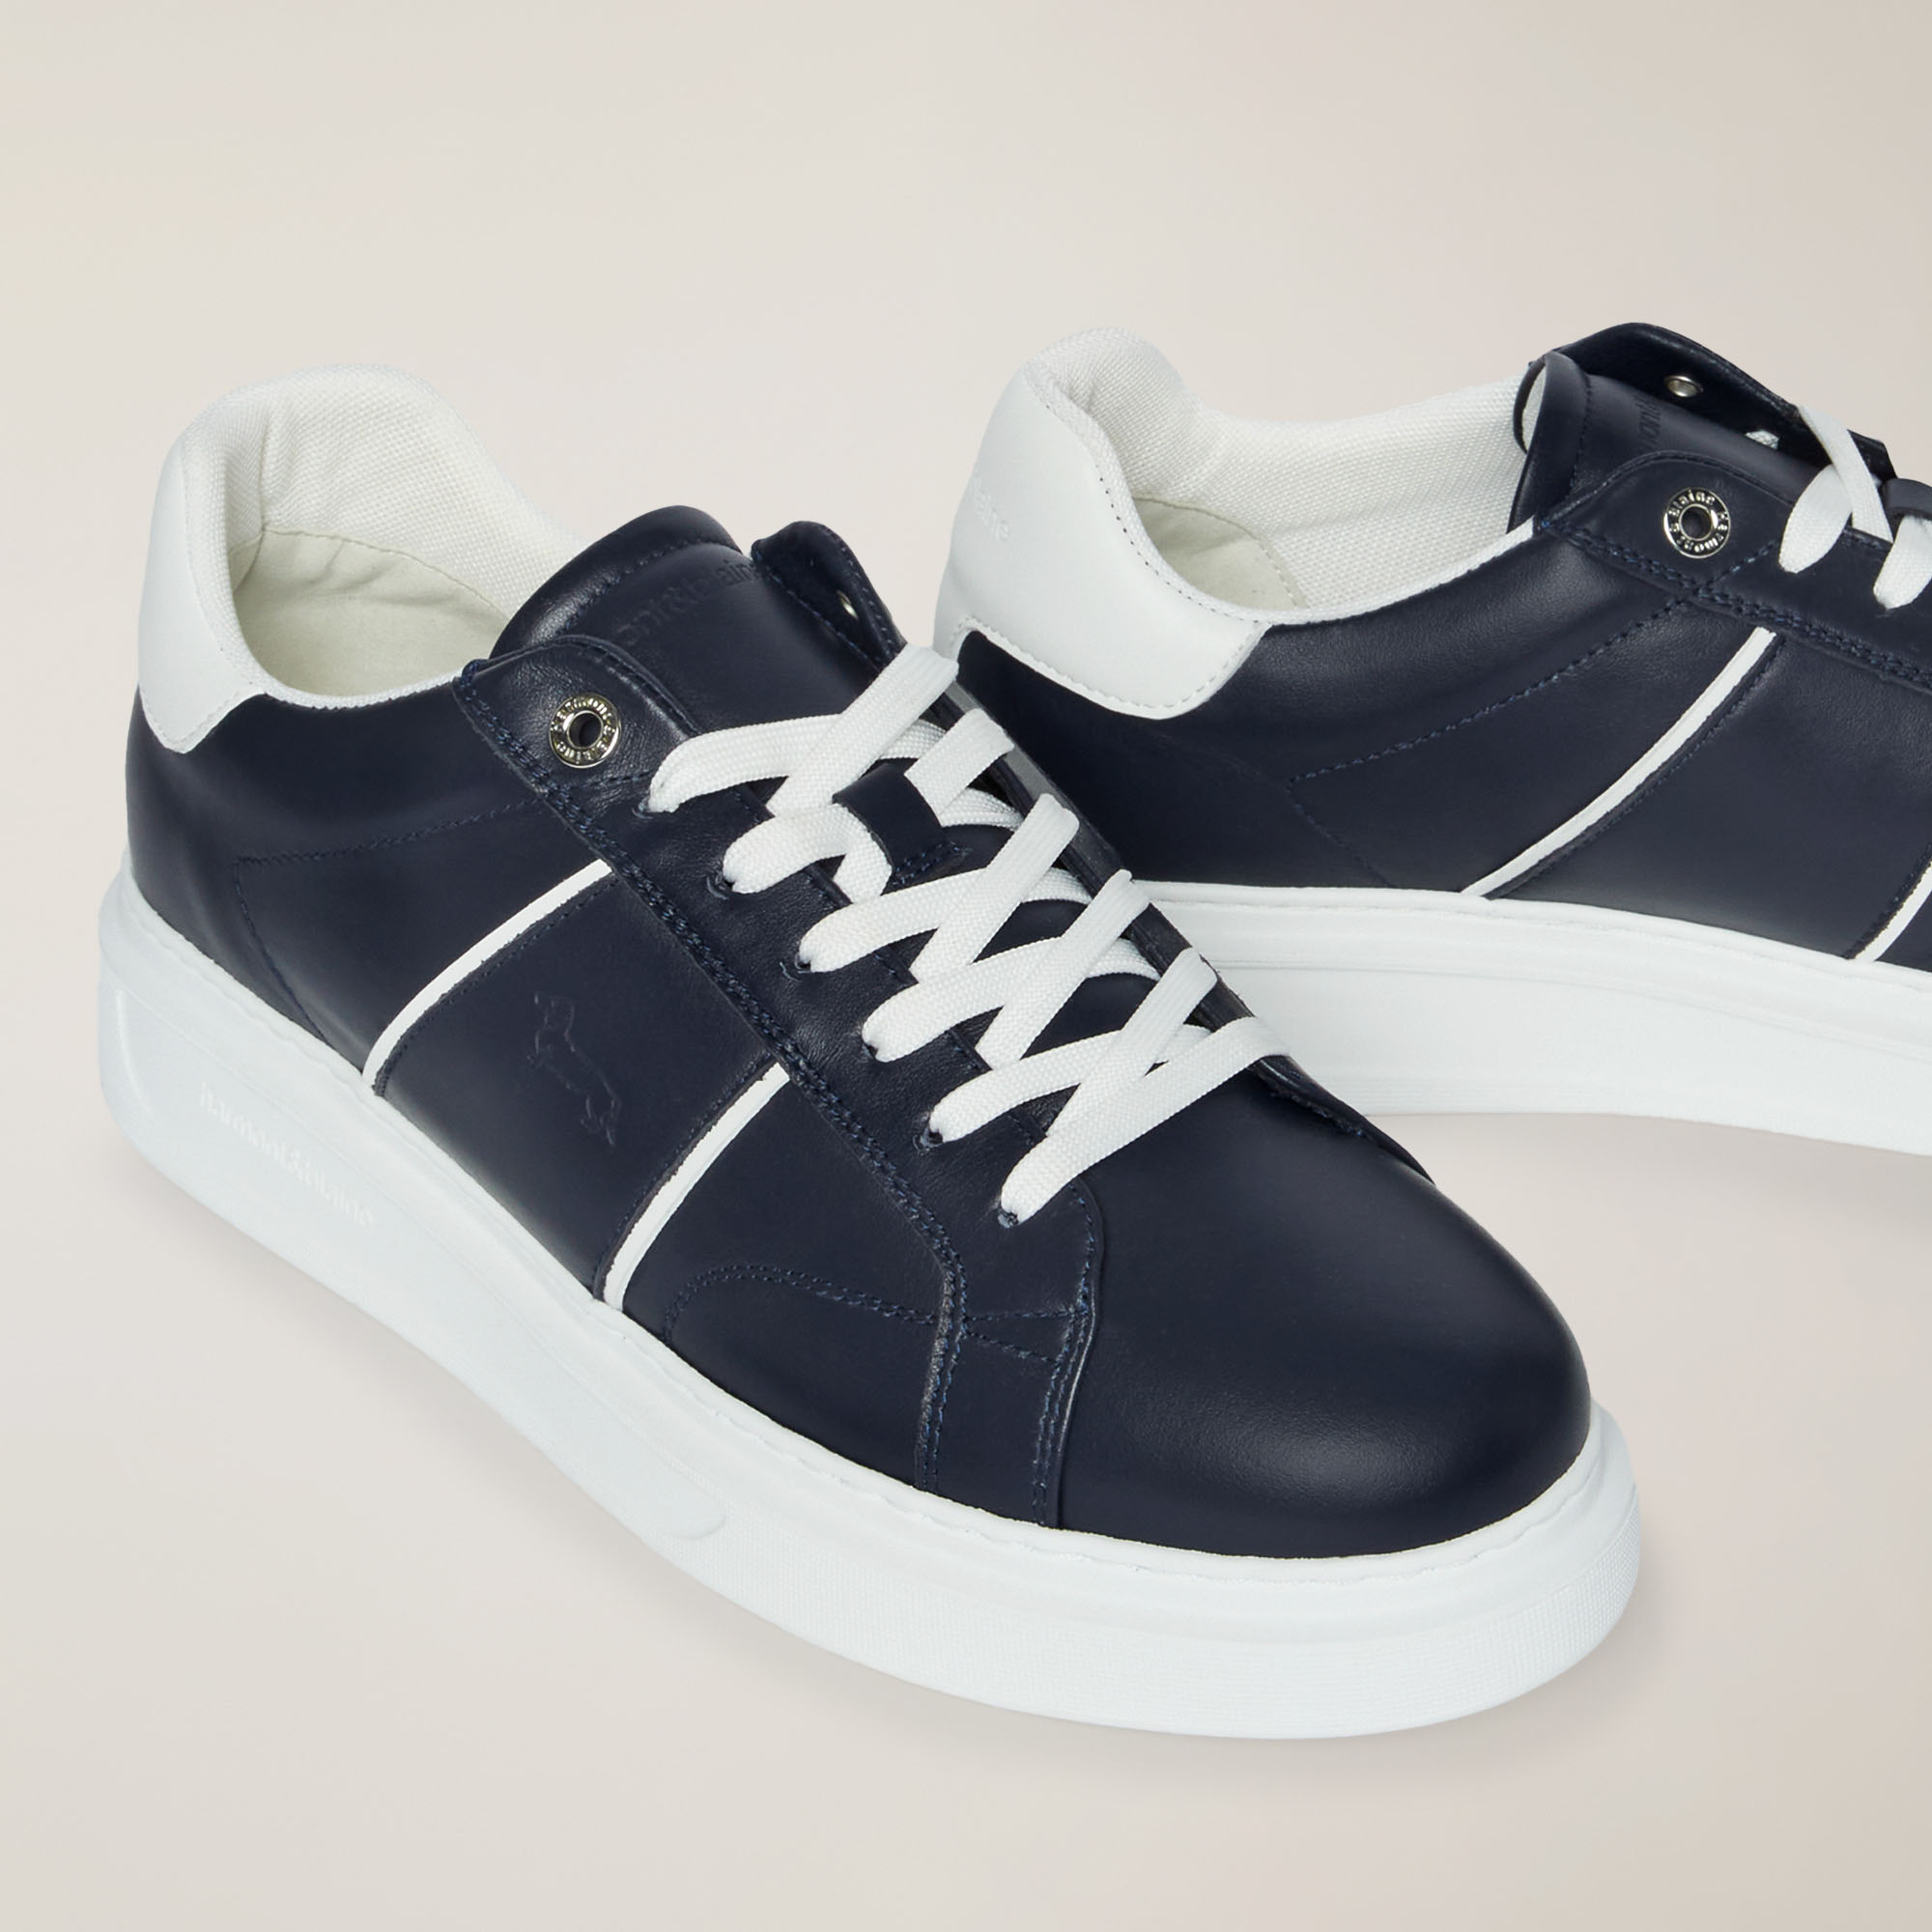 Sneaker mit Kontrastdetails, Blau/Weiß, large image number 3